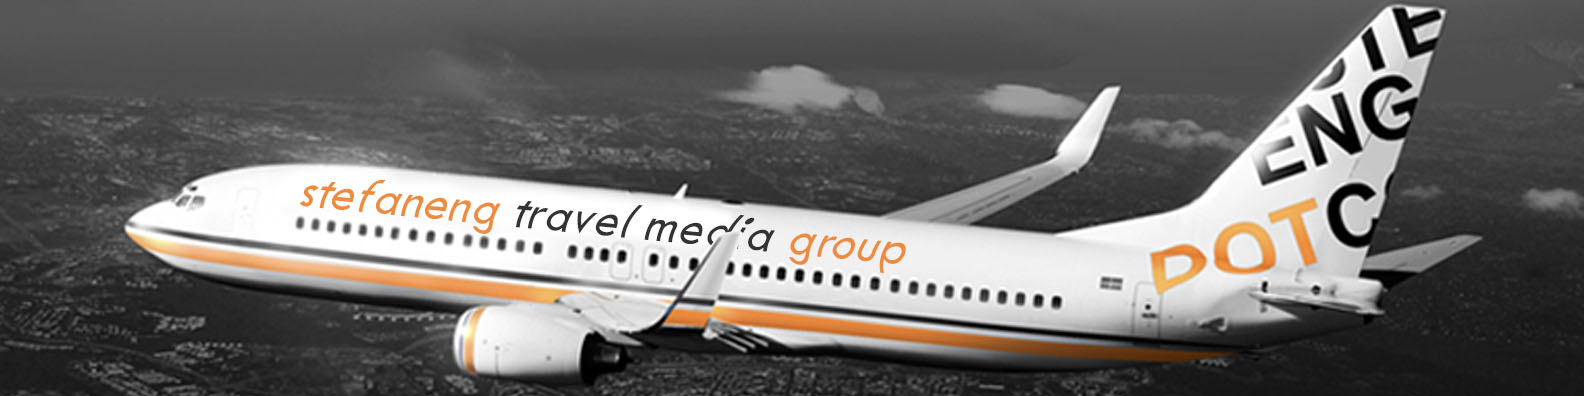 Stefan Eng Travel Media Group Airplane